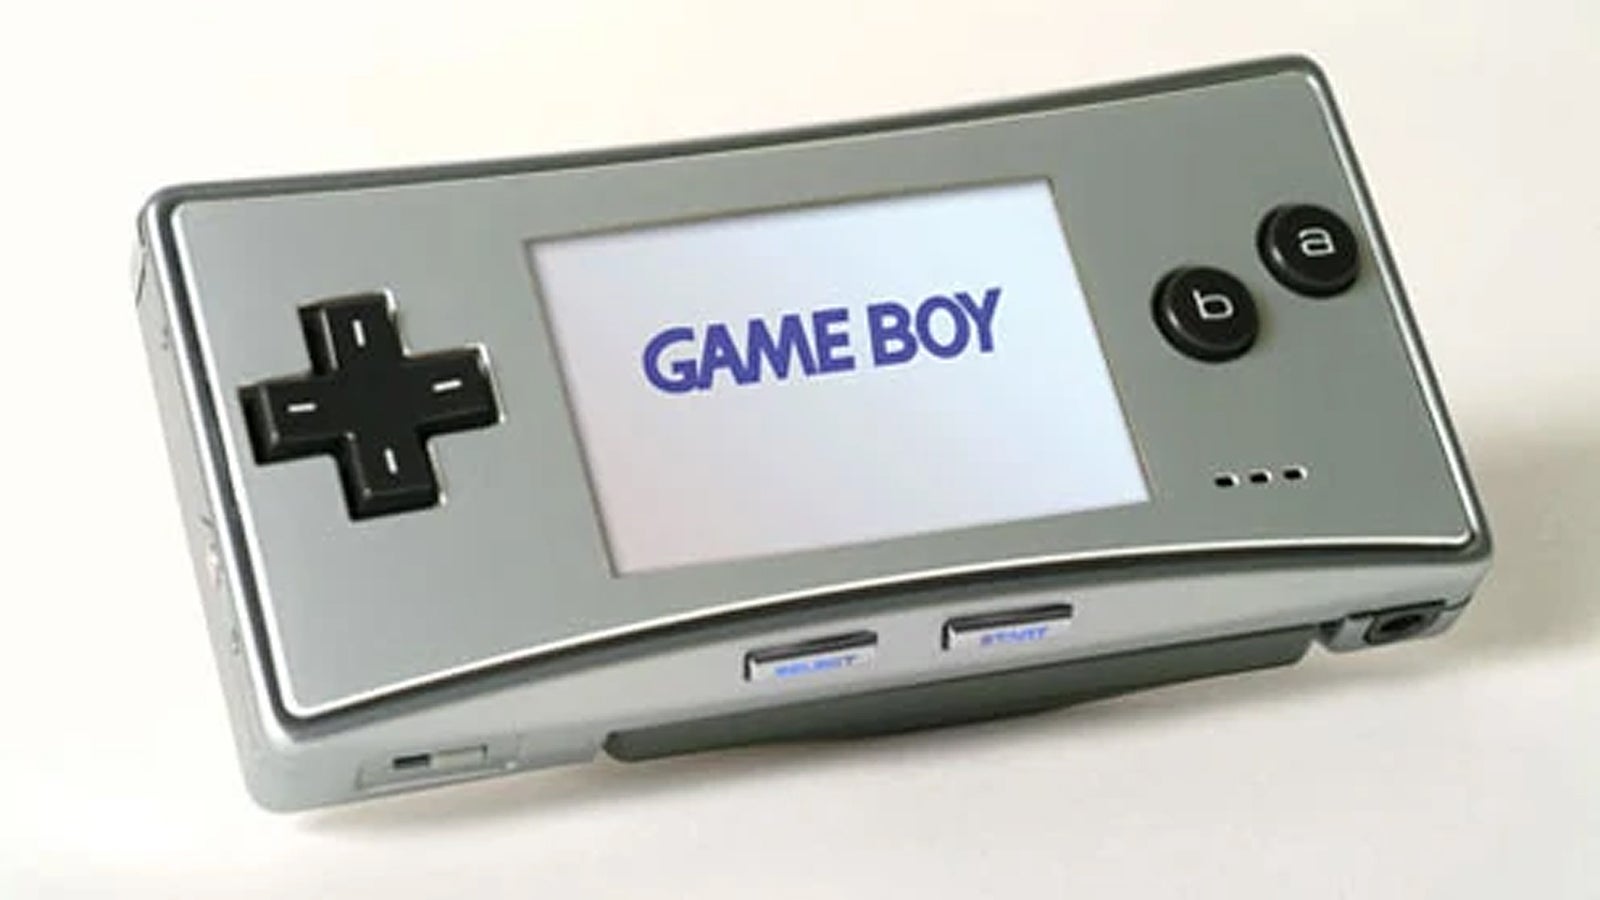 Image for "Game Boy Micro was a nonstarter," Reggie Fils-Aimé warned Nintendo